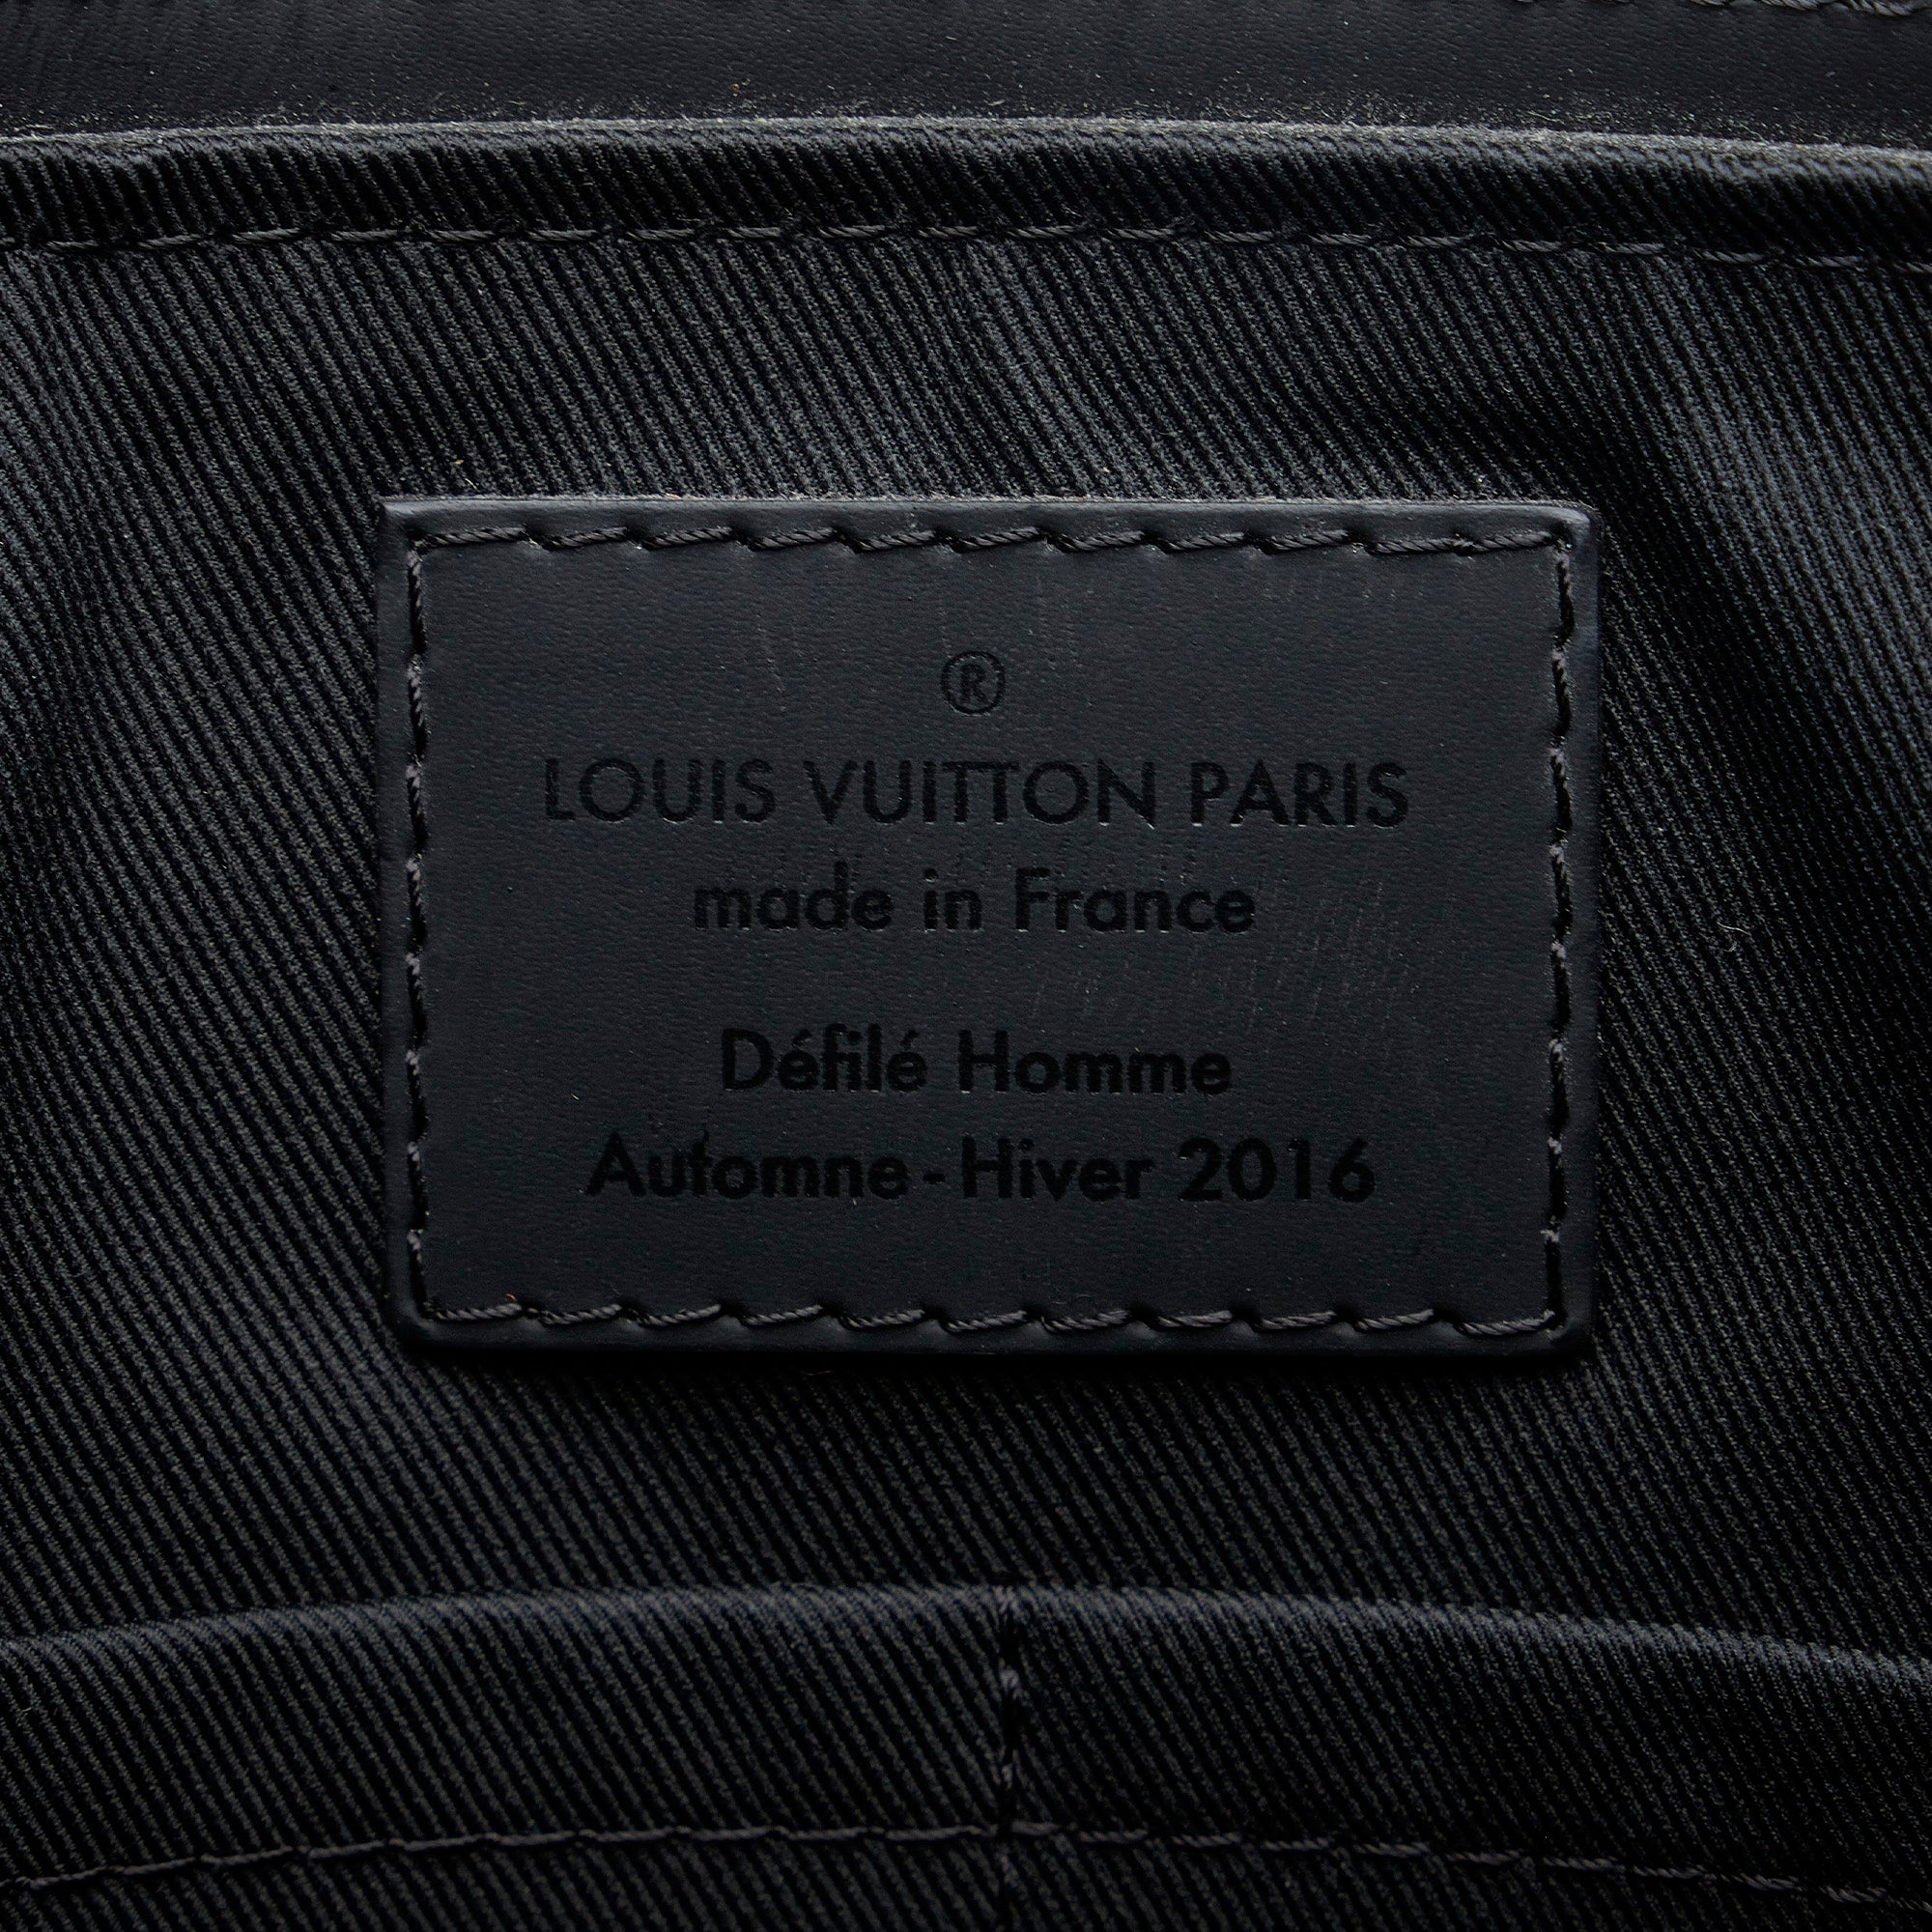 Black Louis Vuitton Monogram Illusion Explorer Tote Satchel